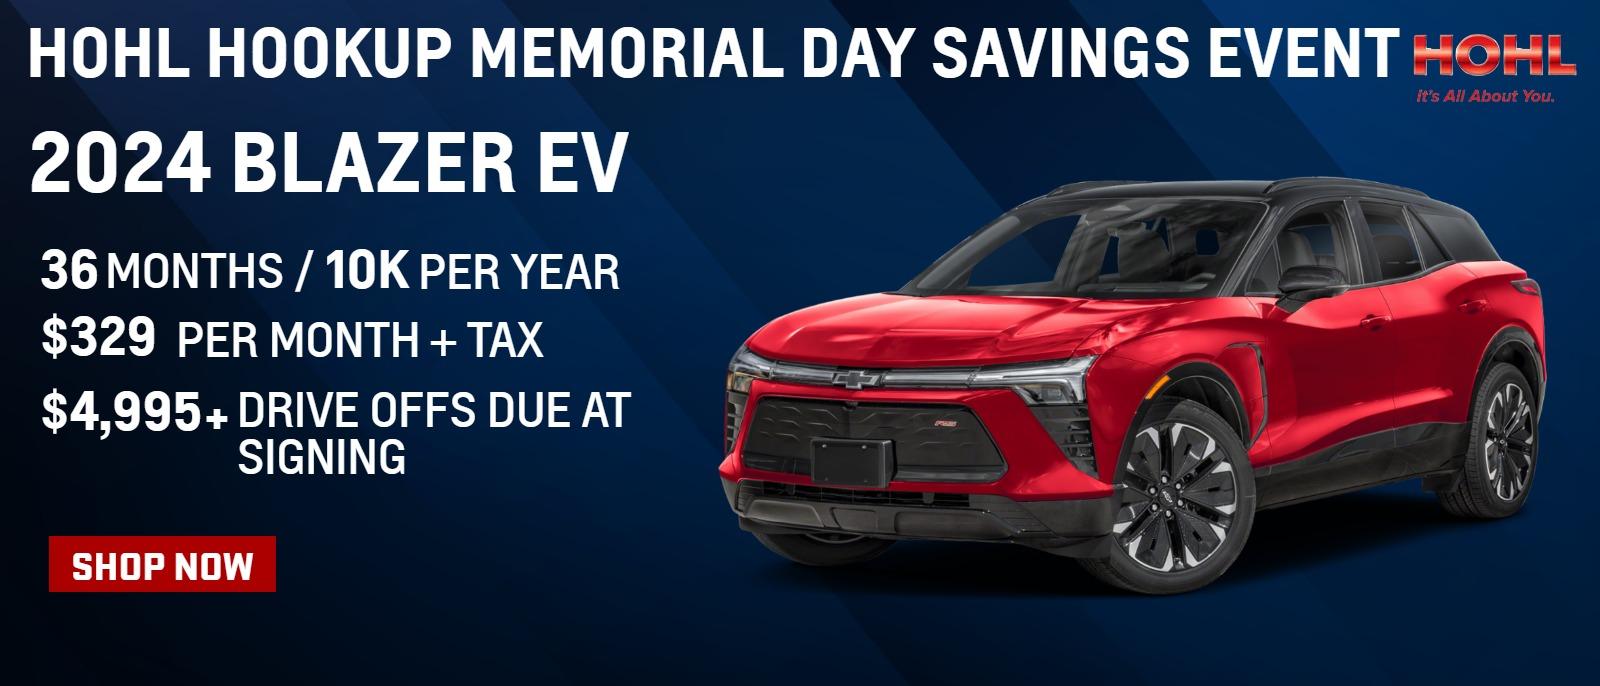 2024 Blazer EV
36 Months /10K Per Year
$329 Per Month + Tax
$4,995 + Drive Offs Due at Signing | 04330600